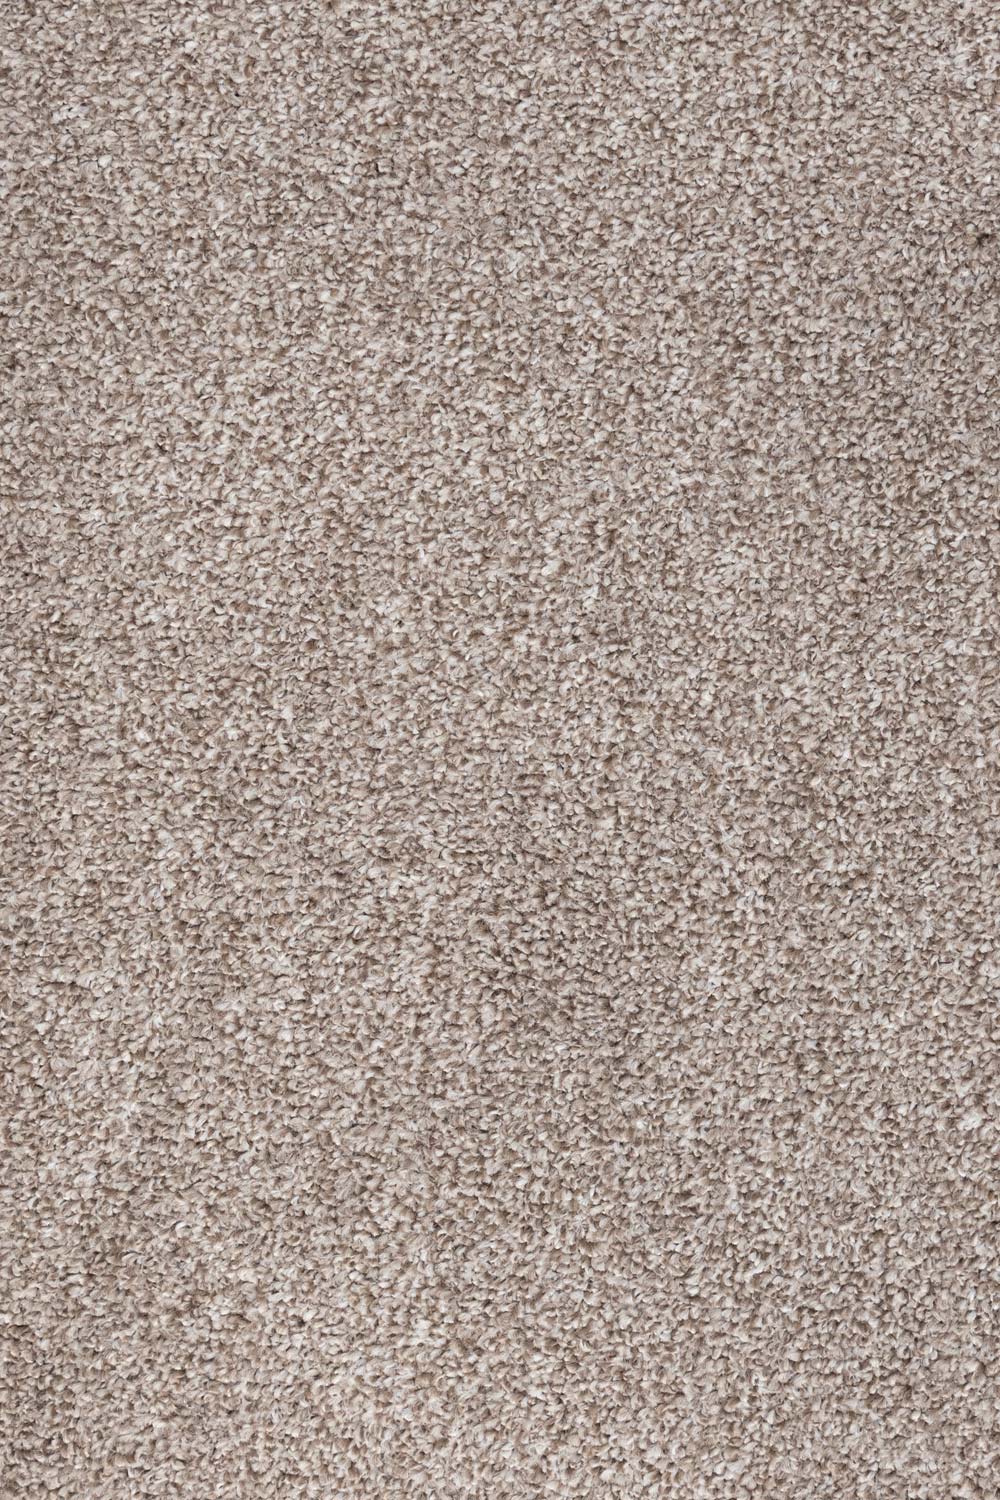 Metrážový koberec Parma 109 světle šedý